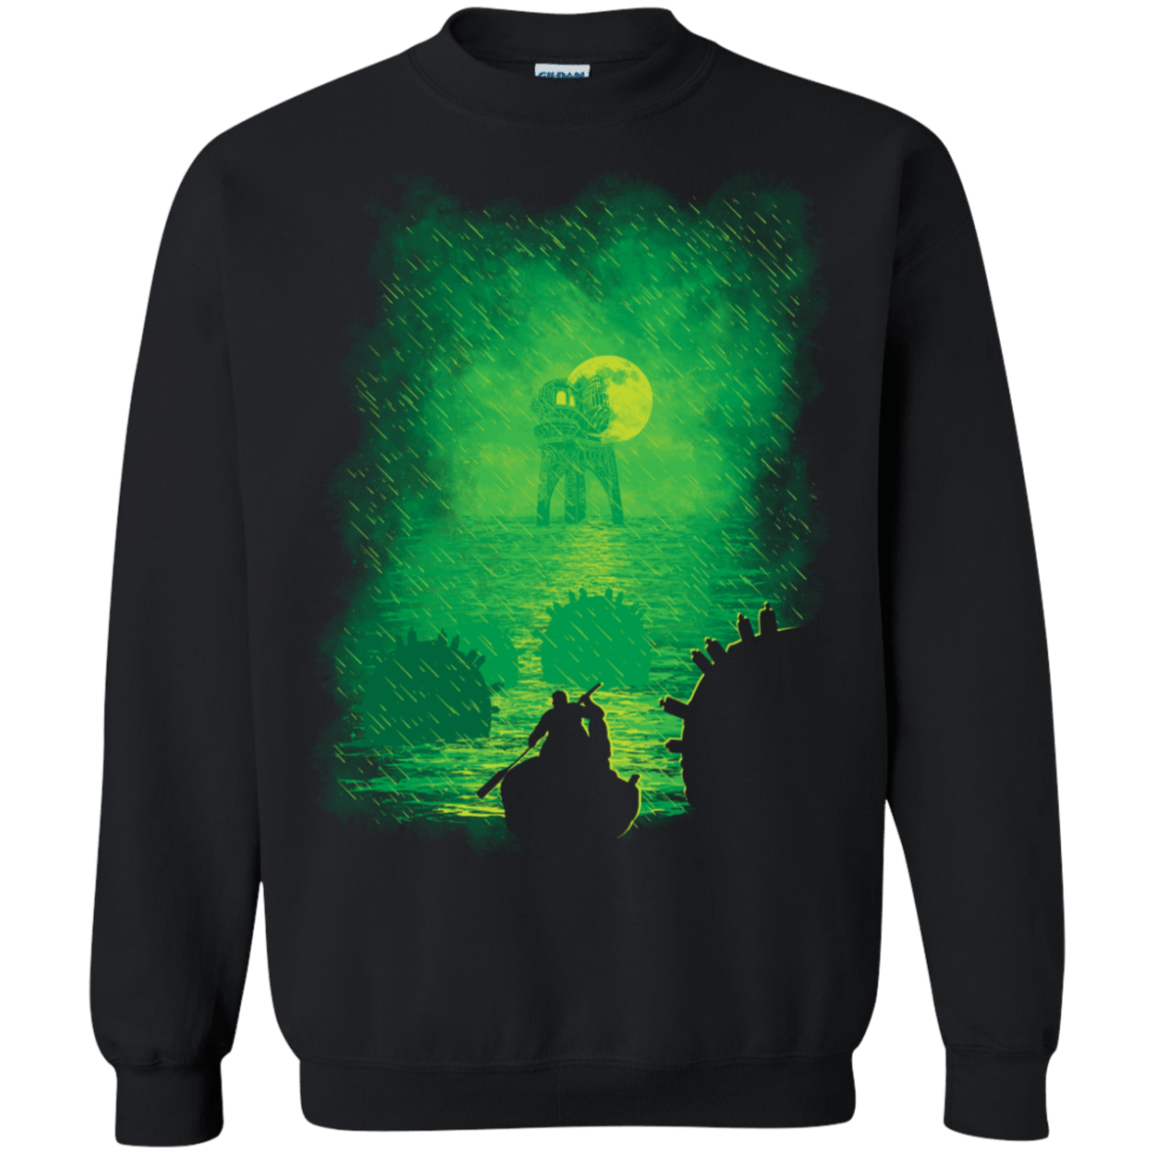 Sweatshirts Black / S Horrific Dream Crewneck Sweatshirt